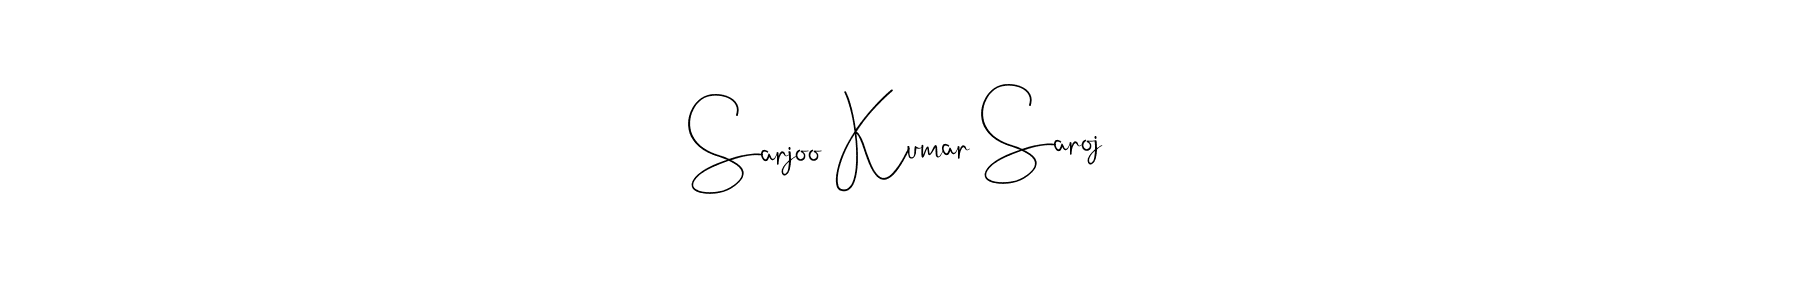 Make a beautiful signature design for name Sarjoo Kumar Saroj. Use this online signature maker to create a handwritten signature for free. Sarjoo Kumar Saroj signature style 4 images and pictures png